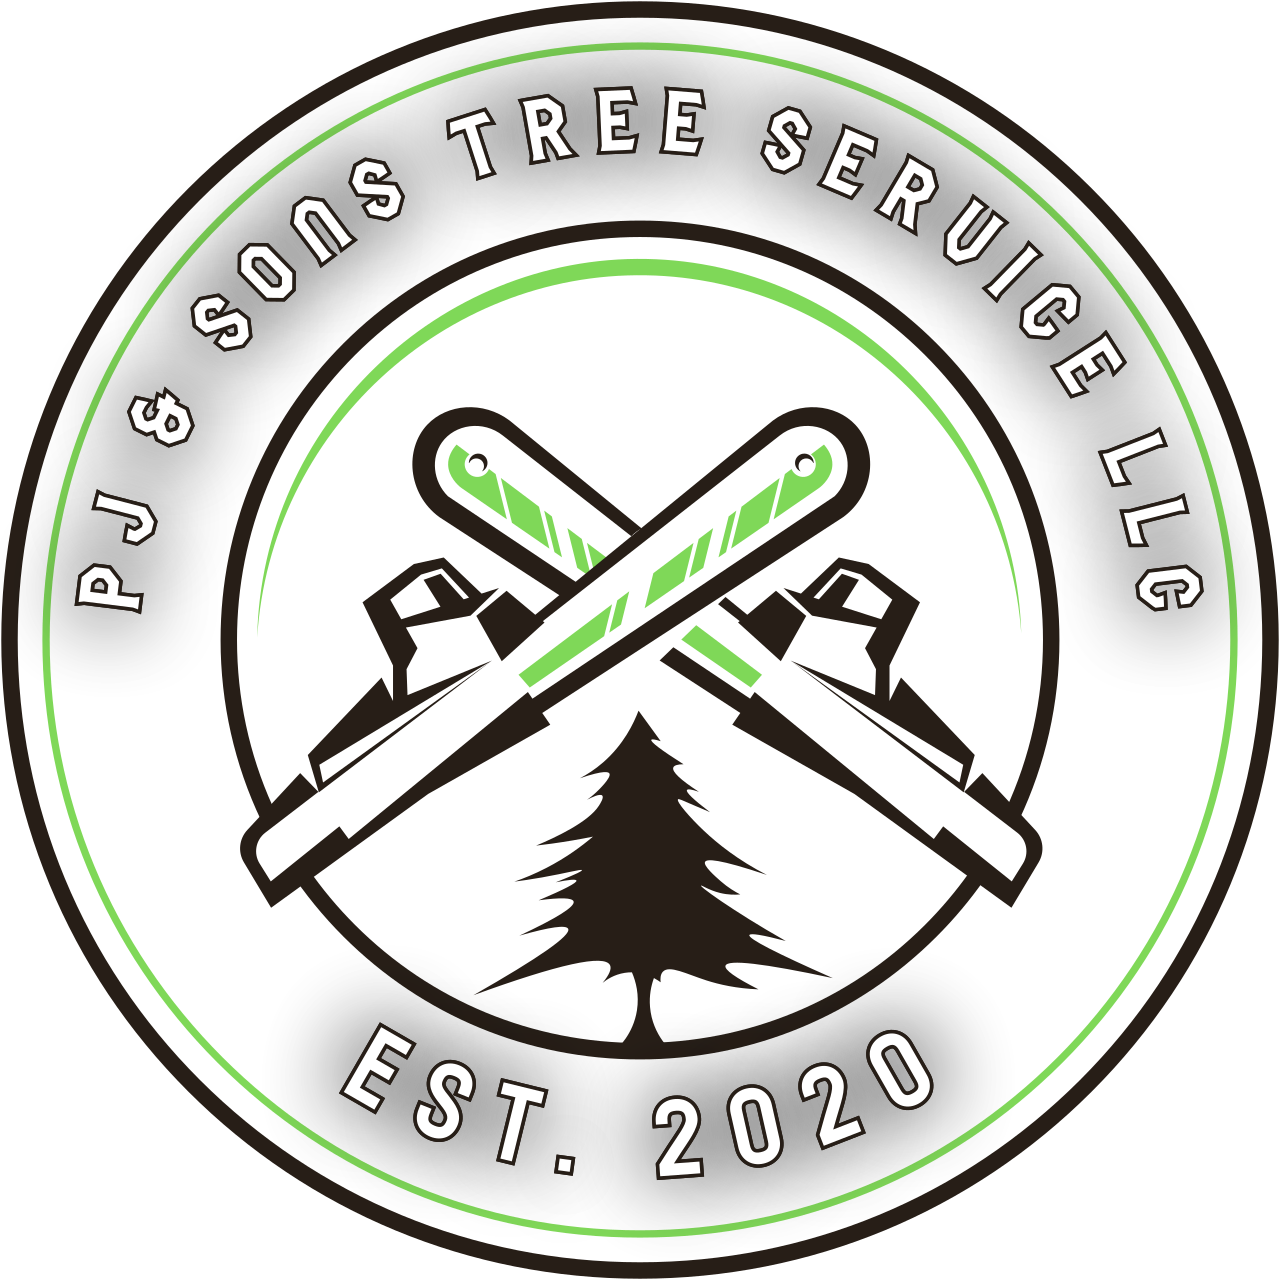 PJ & SONS TREE SERVICE LLC's logo